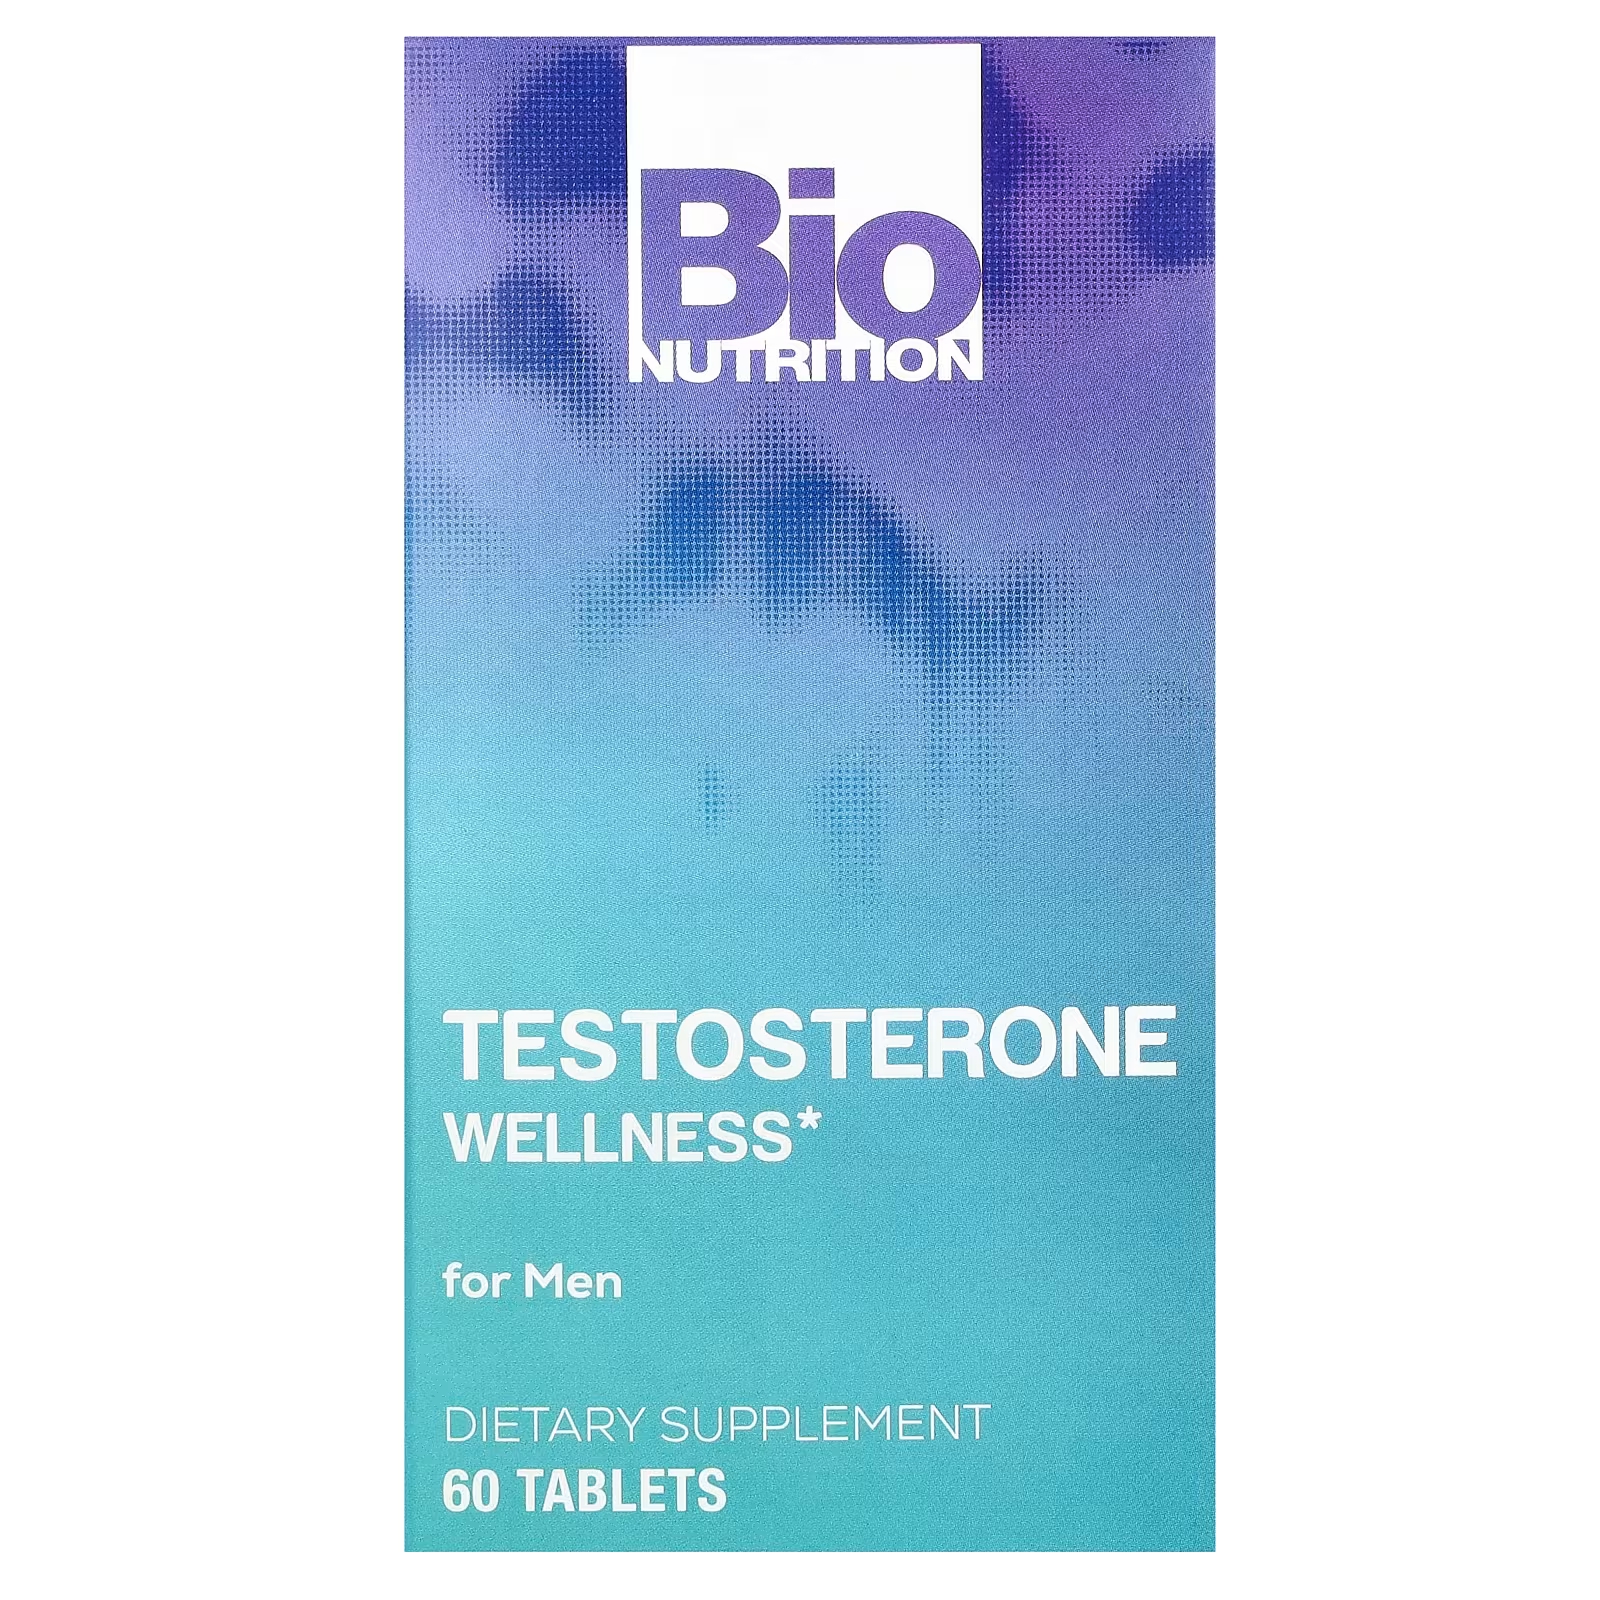 Тестостерон Bio Nutrition для мужчин, 60 таблеток gat men s multi test мультивитаминная добавка для мужчин повышающая уровень тестостерона 90 таблеток